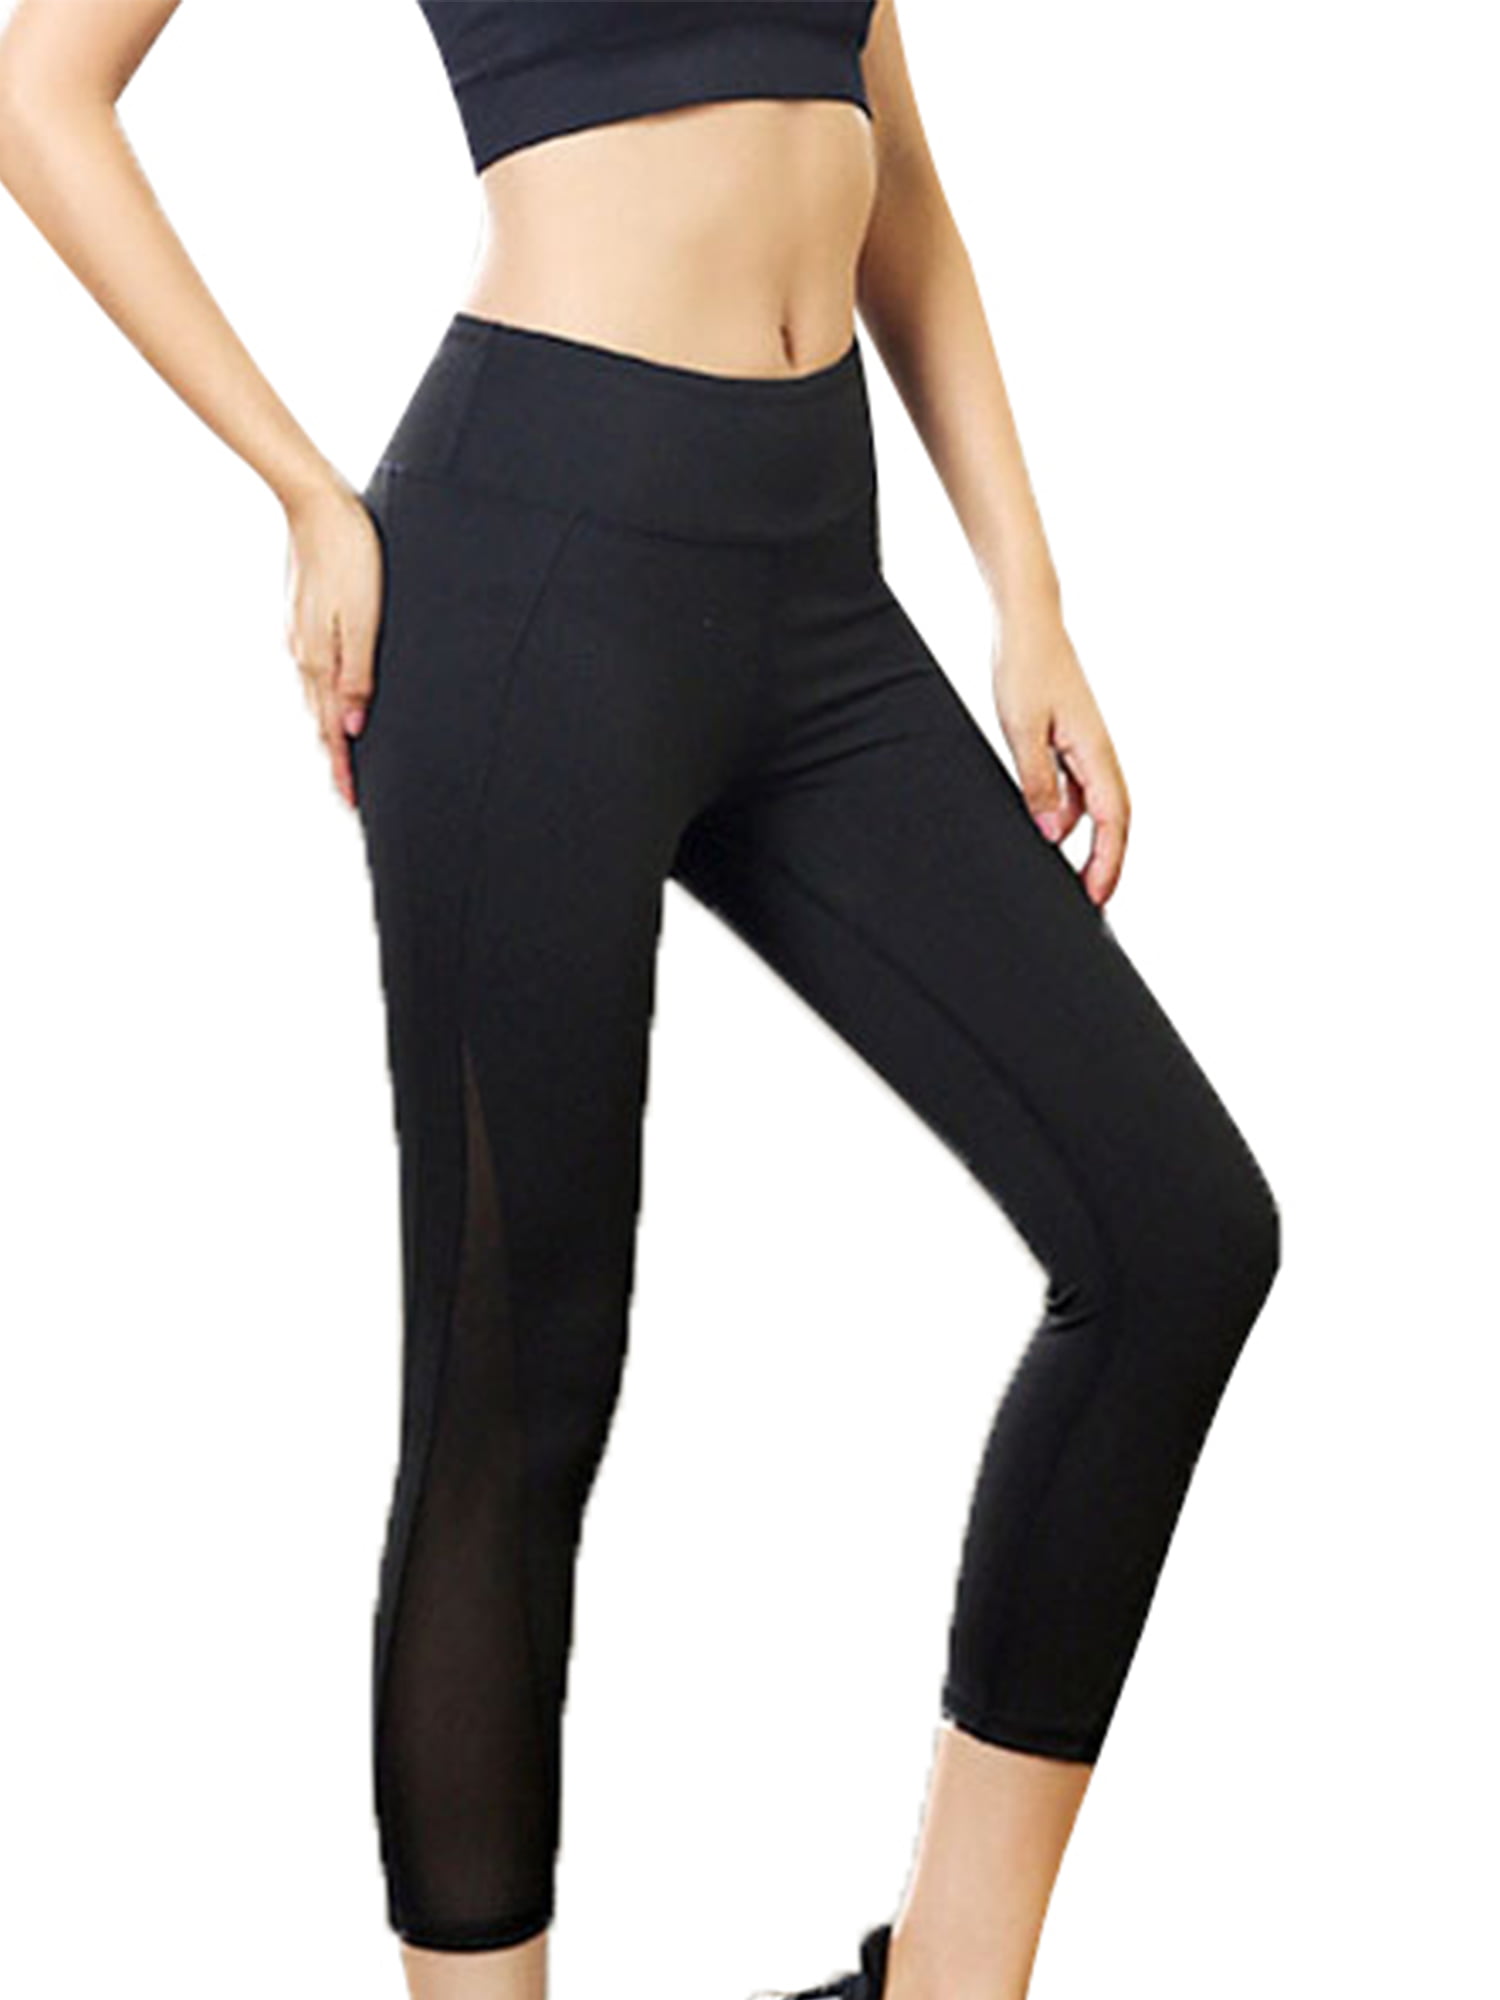 Pants for Women High Waist Yoga Pants Mesh Side Stretch Leggings Tummy Control Sports Workout Leggings 